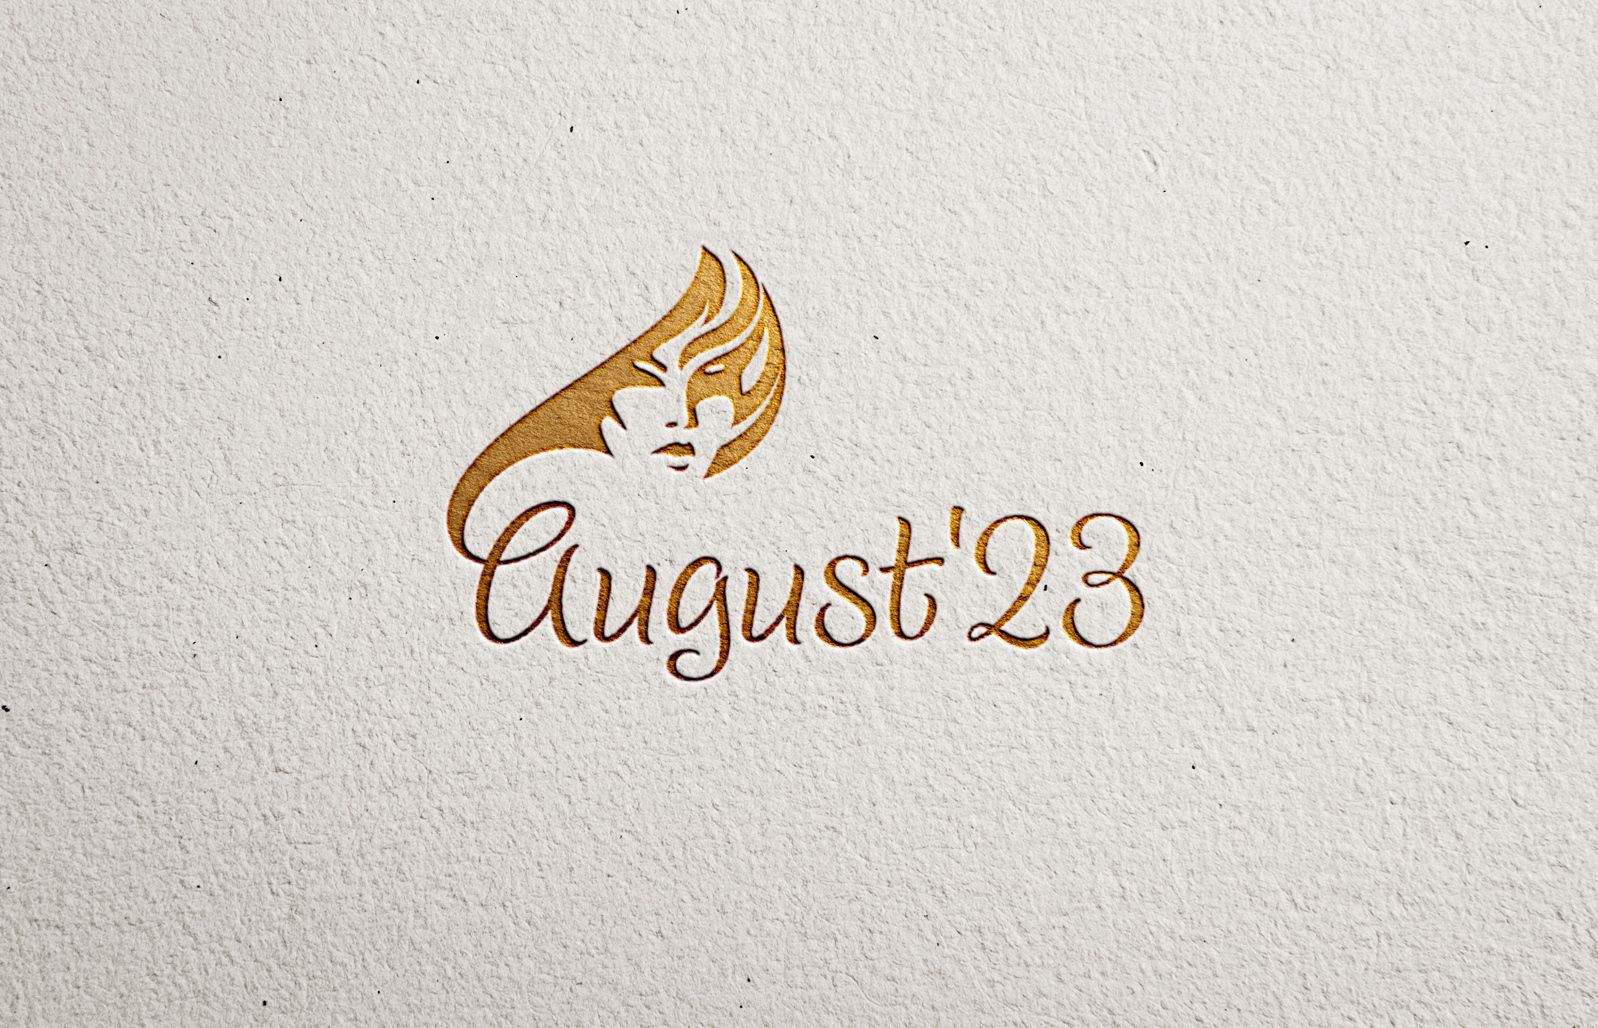 Логотип для AUGUST'23 - дизайнер andblin61